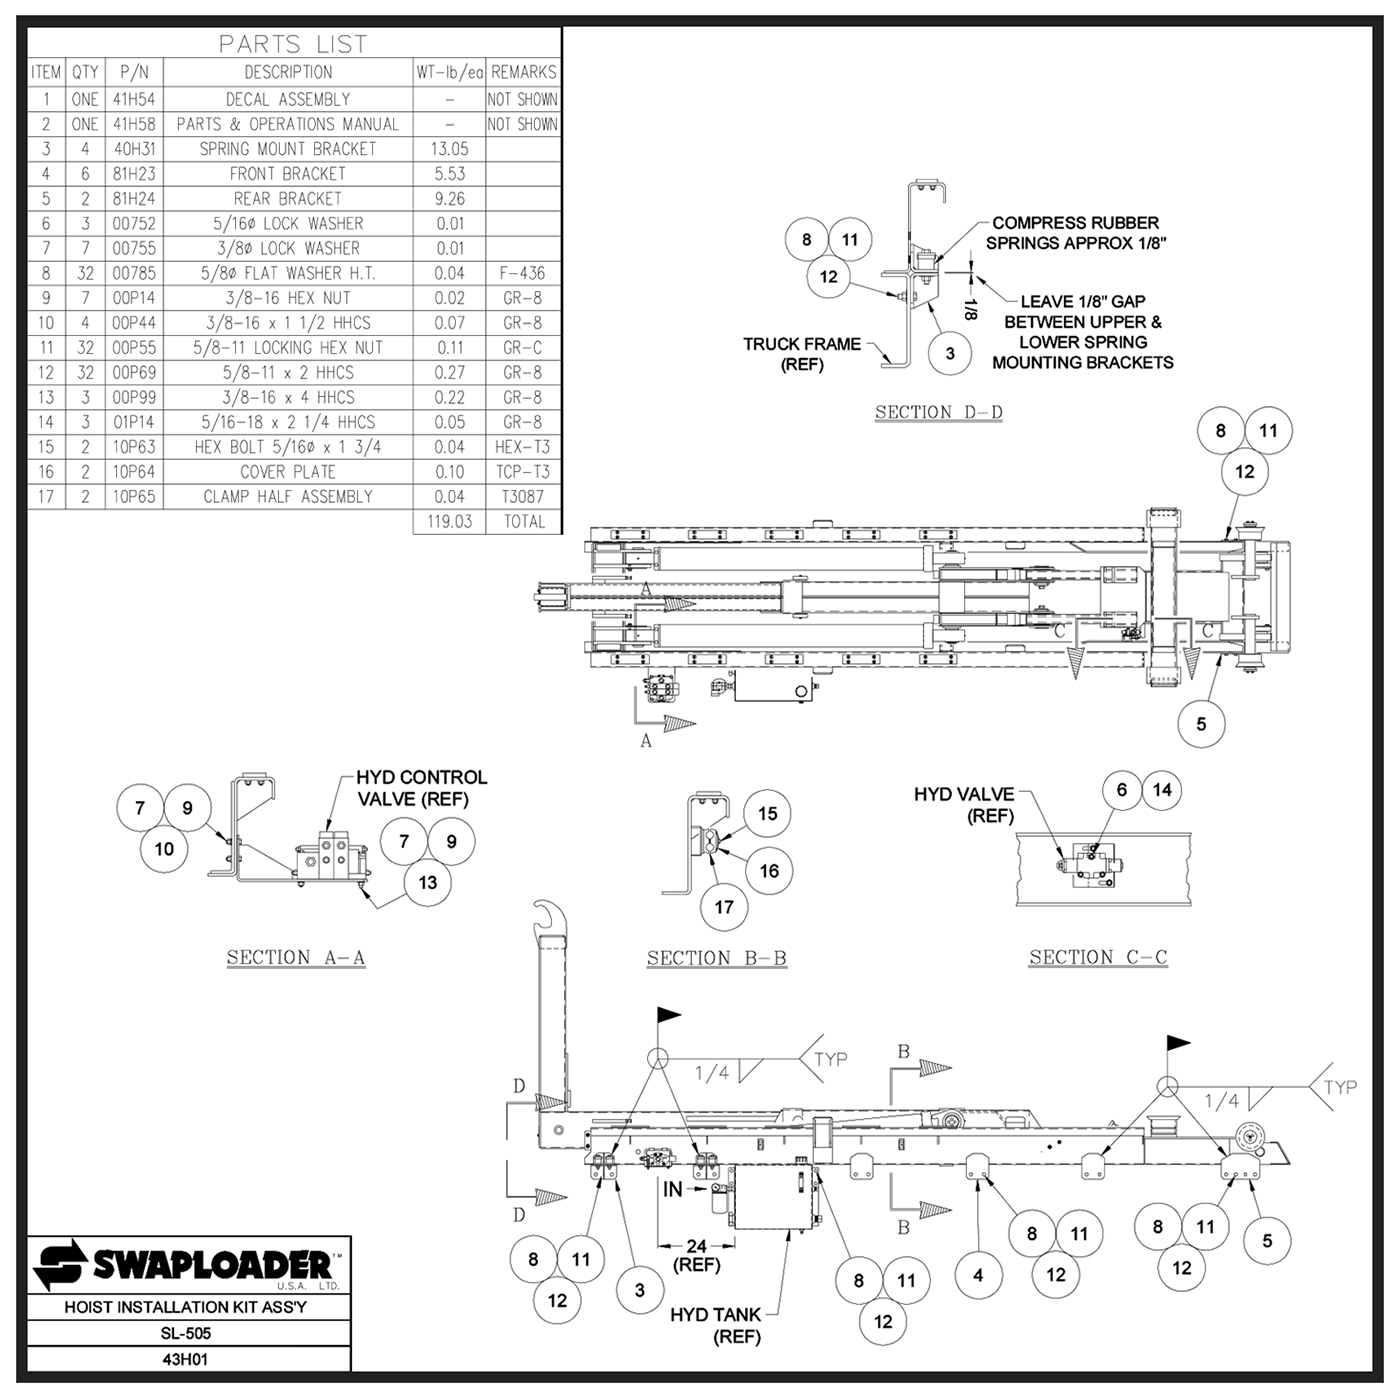 Swaploader SL-505 Hoist Installation Kit Assembly Diagram